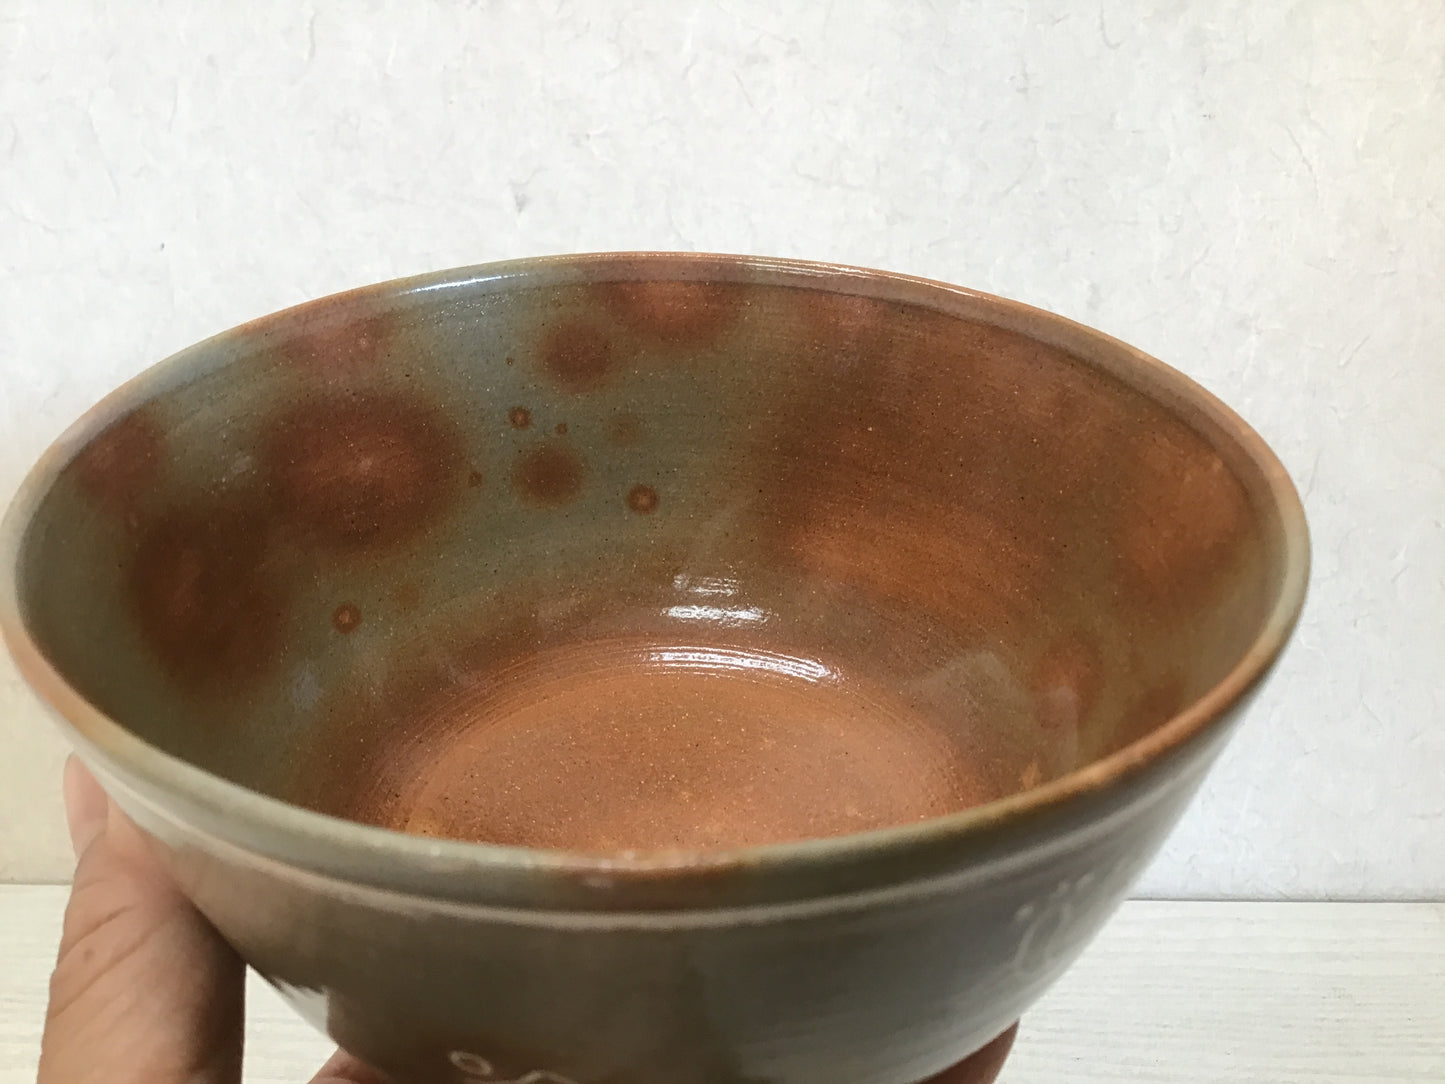 Y1917 CHAWAN Gohon signed box Japanese bowl pottery Japan tea ceremony